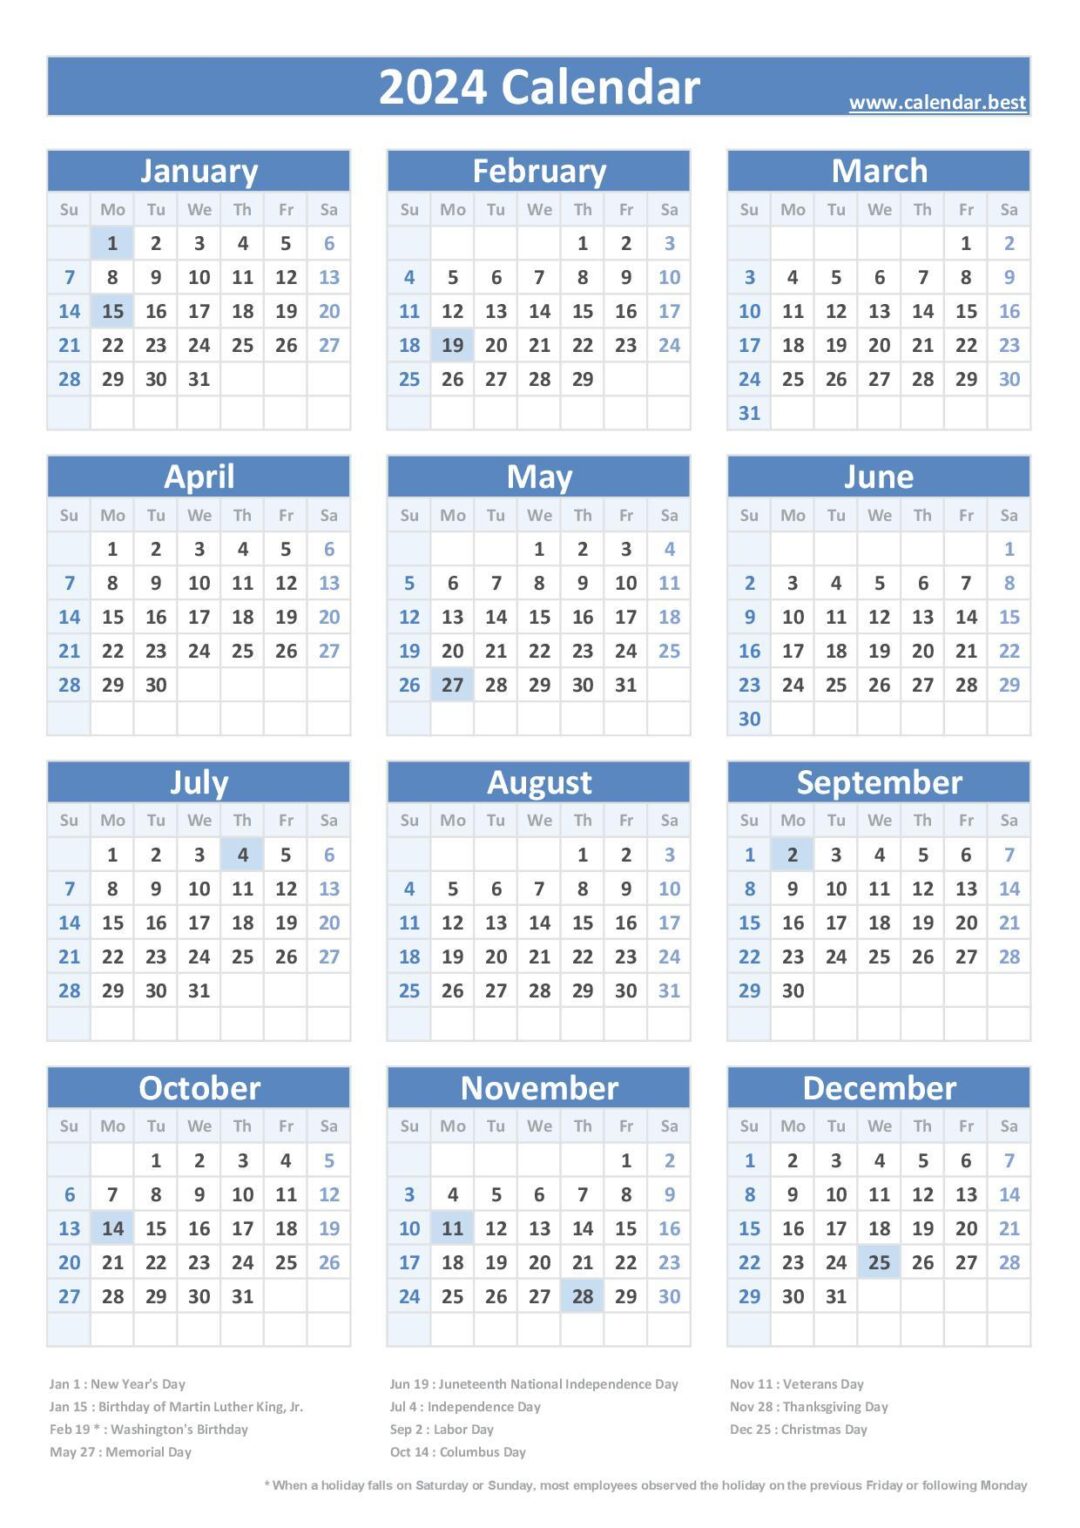 US Postal Service Holidays 2024 Calendar (USPS Holidays)